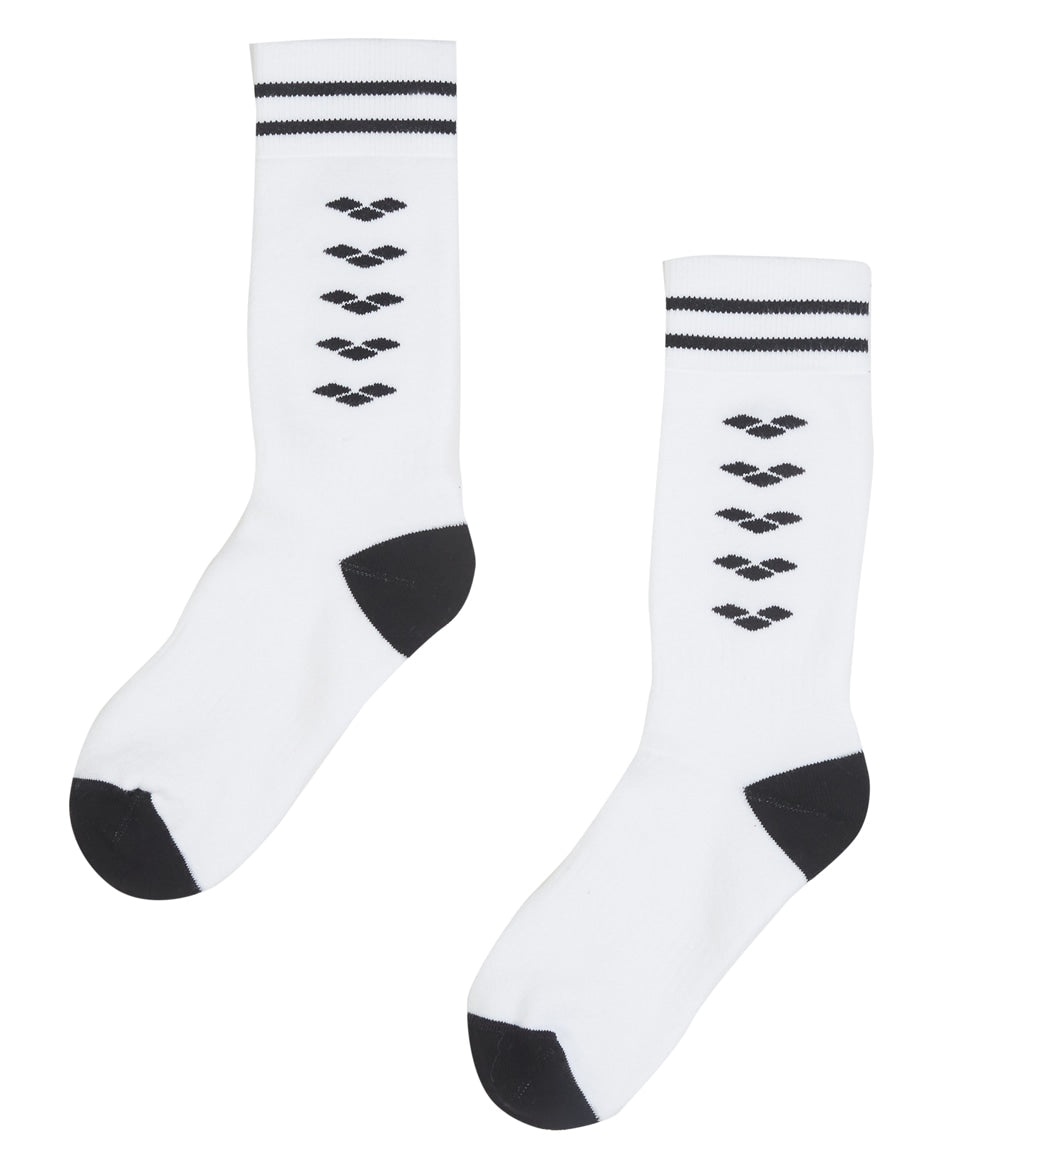 Arena Unisex Icons Socks